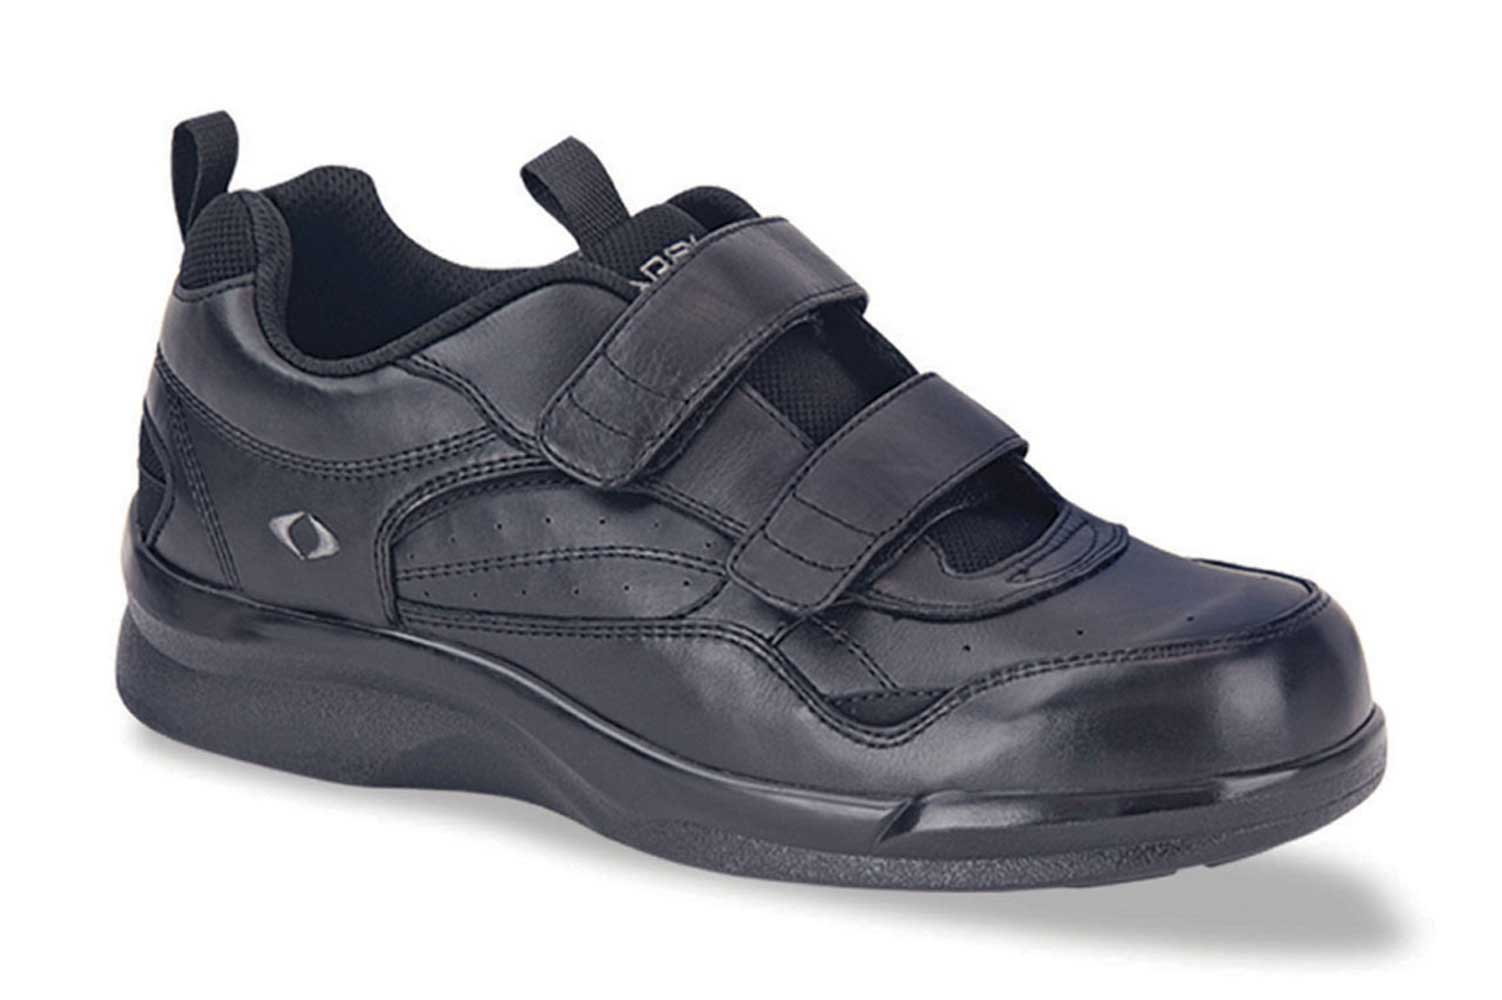 Apex Ambulator Shoes G8010M Biomechanical Athletic Shoe - Men's Comfort Therapeutic Diabetic Shoe - Medium - Extra Wide - Extra Depth For Orthotics